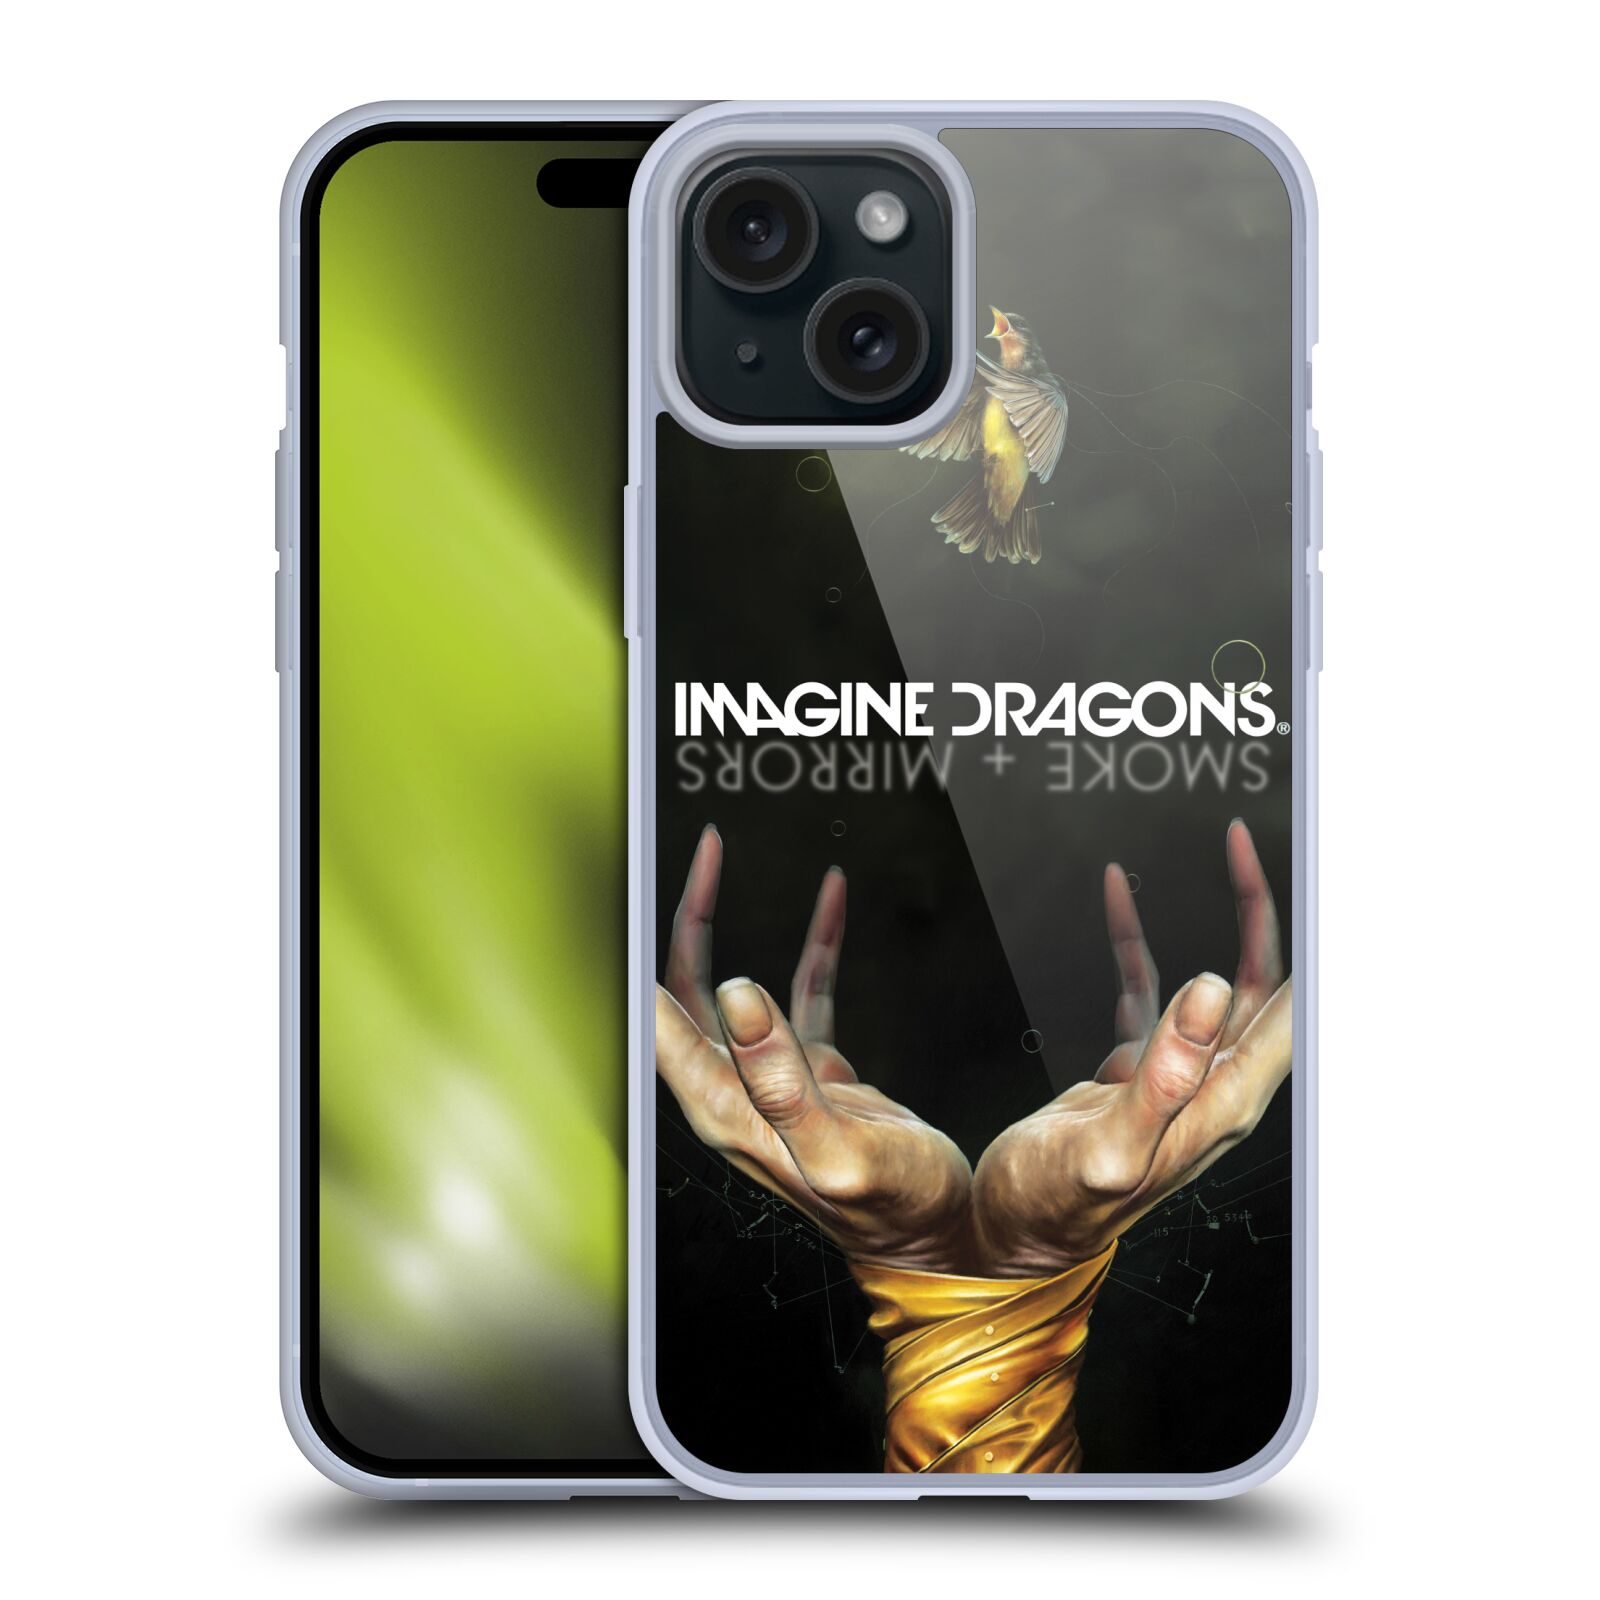 Silikonové lesklé pouzdro na mobil Apple iPhone 15 Plus - Imagine Dragons - Smoke And Mirrors (Silikonový lesklý kryt, obal, pouzdro na mobilní telefon Apple iPhone 15 Plus s licencovaným motivem Imagine Dragons - Smoke And Mirrors)